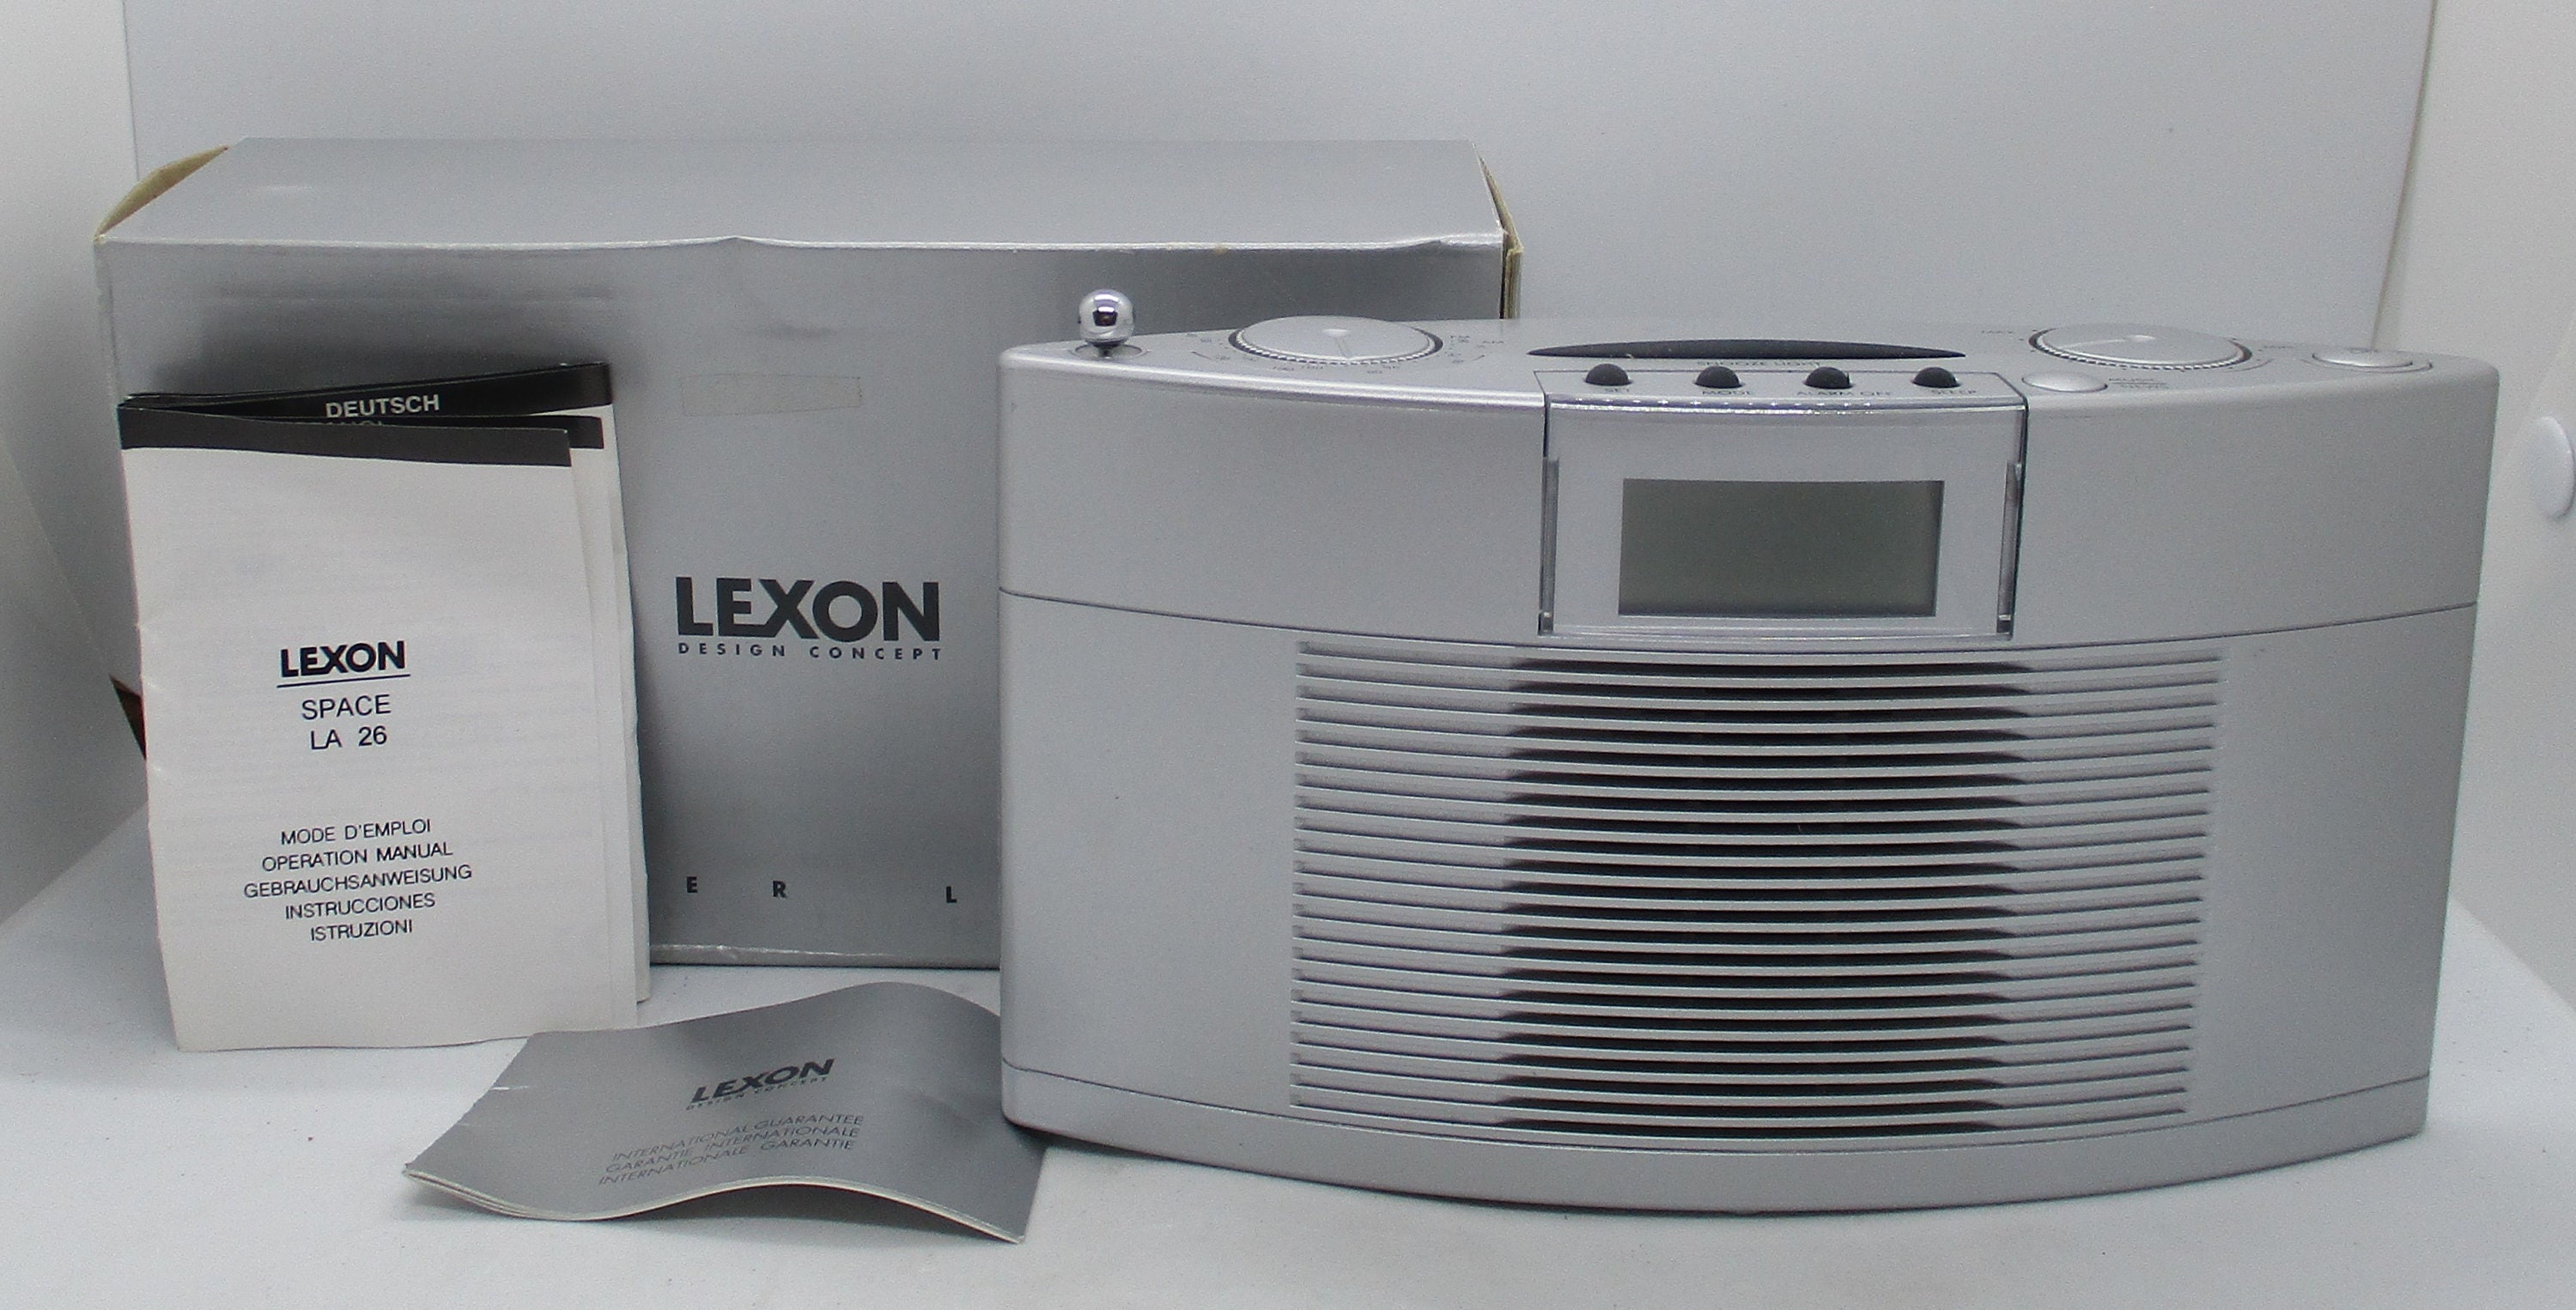 New Rare Lexon LA 26 SPACE Alarm Radio 1990s Etsy